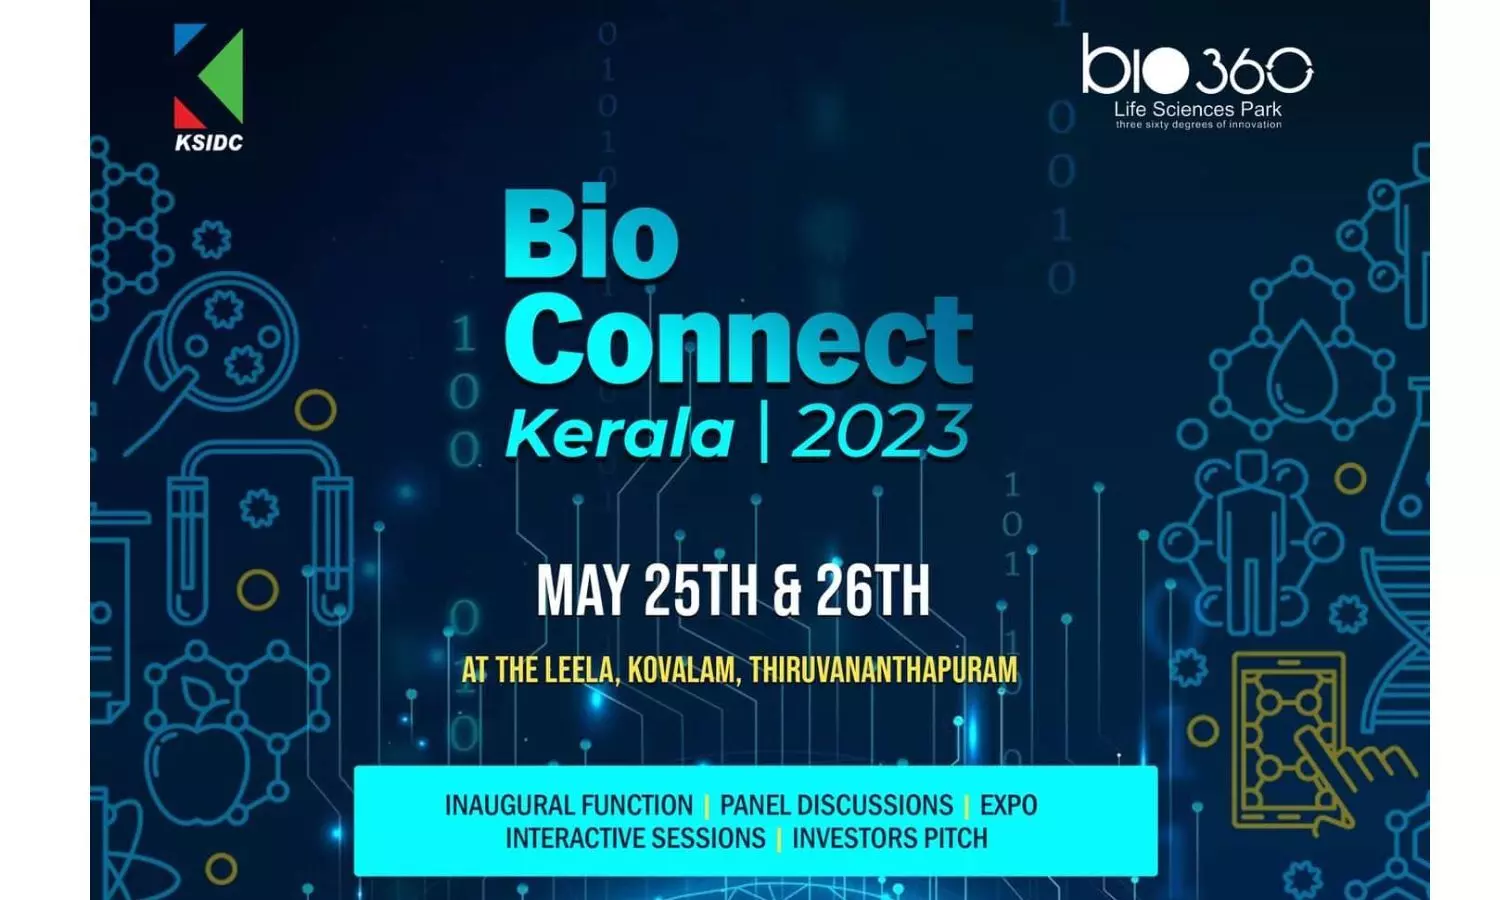 Bio Connect Kerala